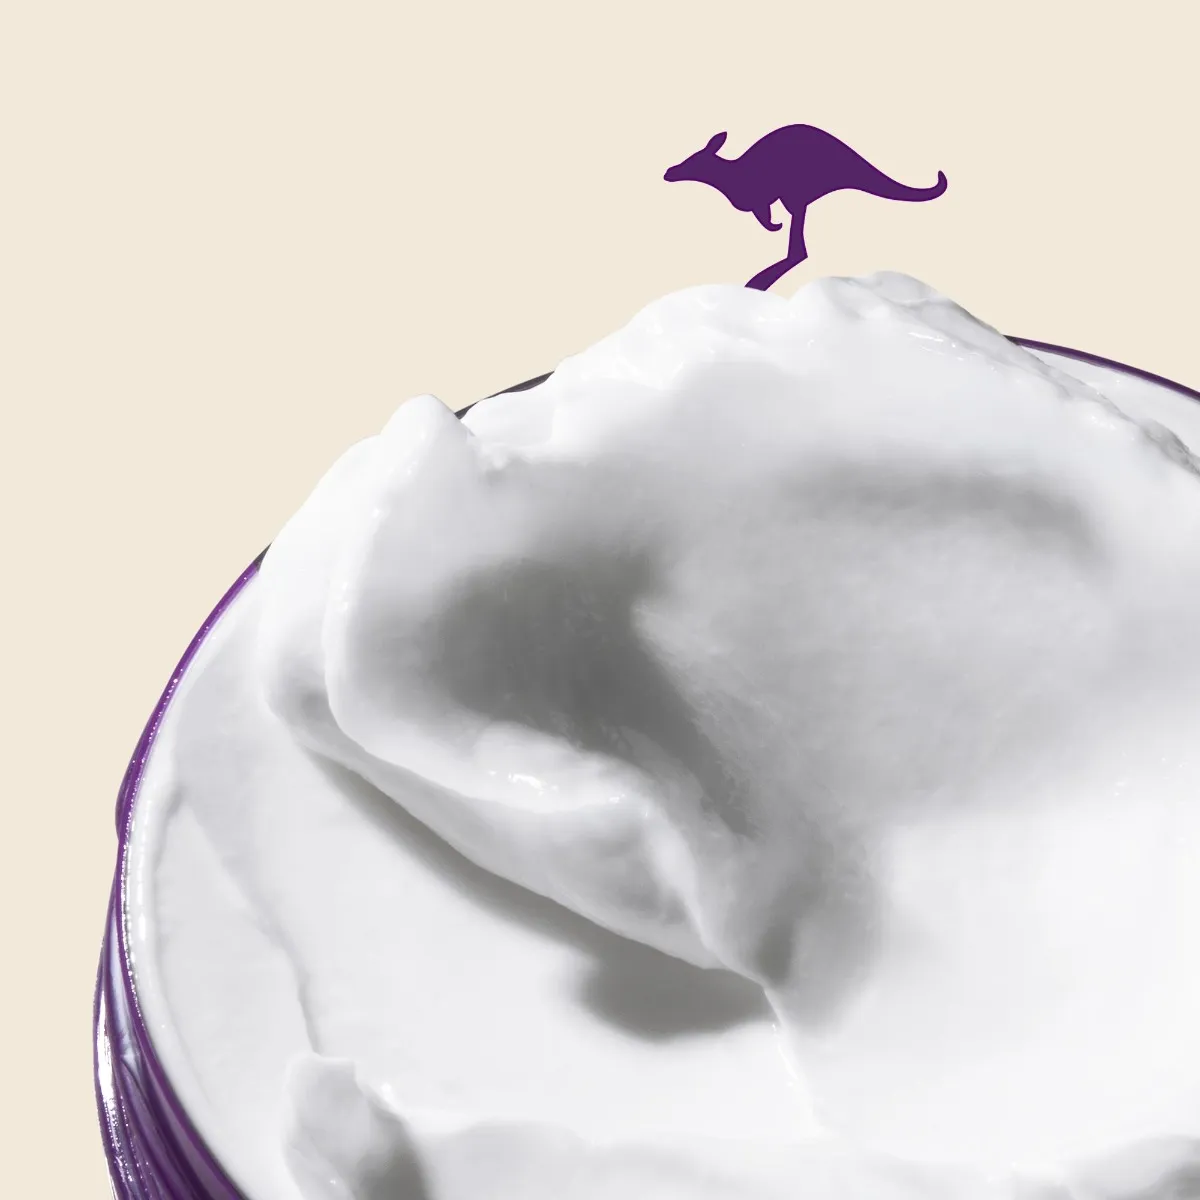 Aussie SOS Supercharged Moisture maska na vlasy 450 ml